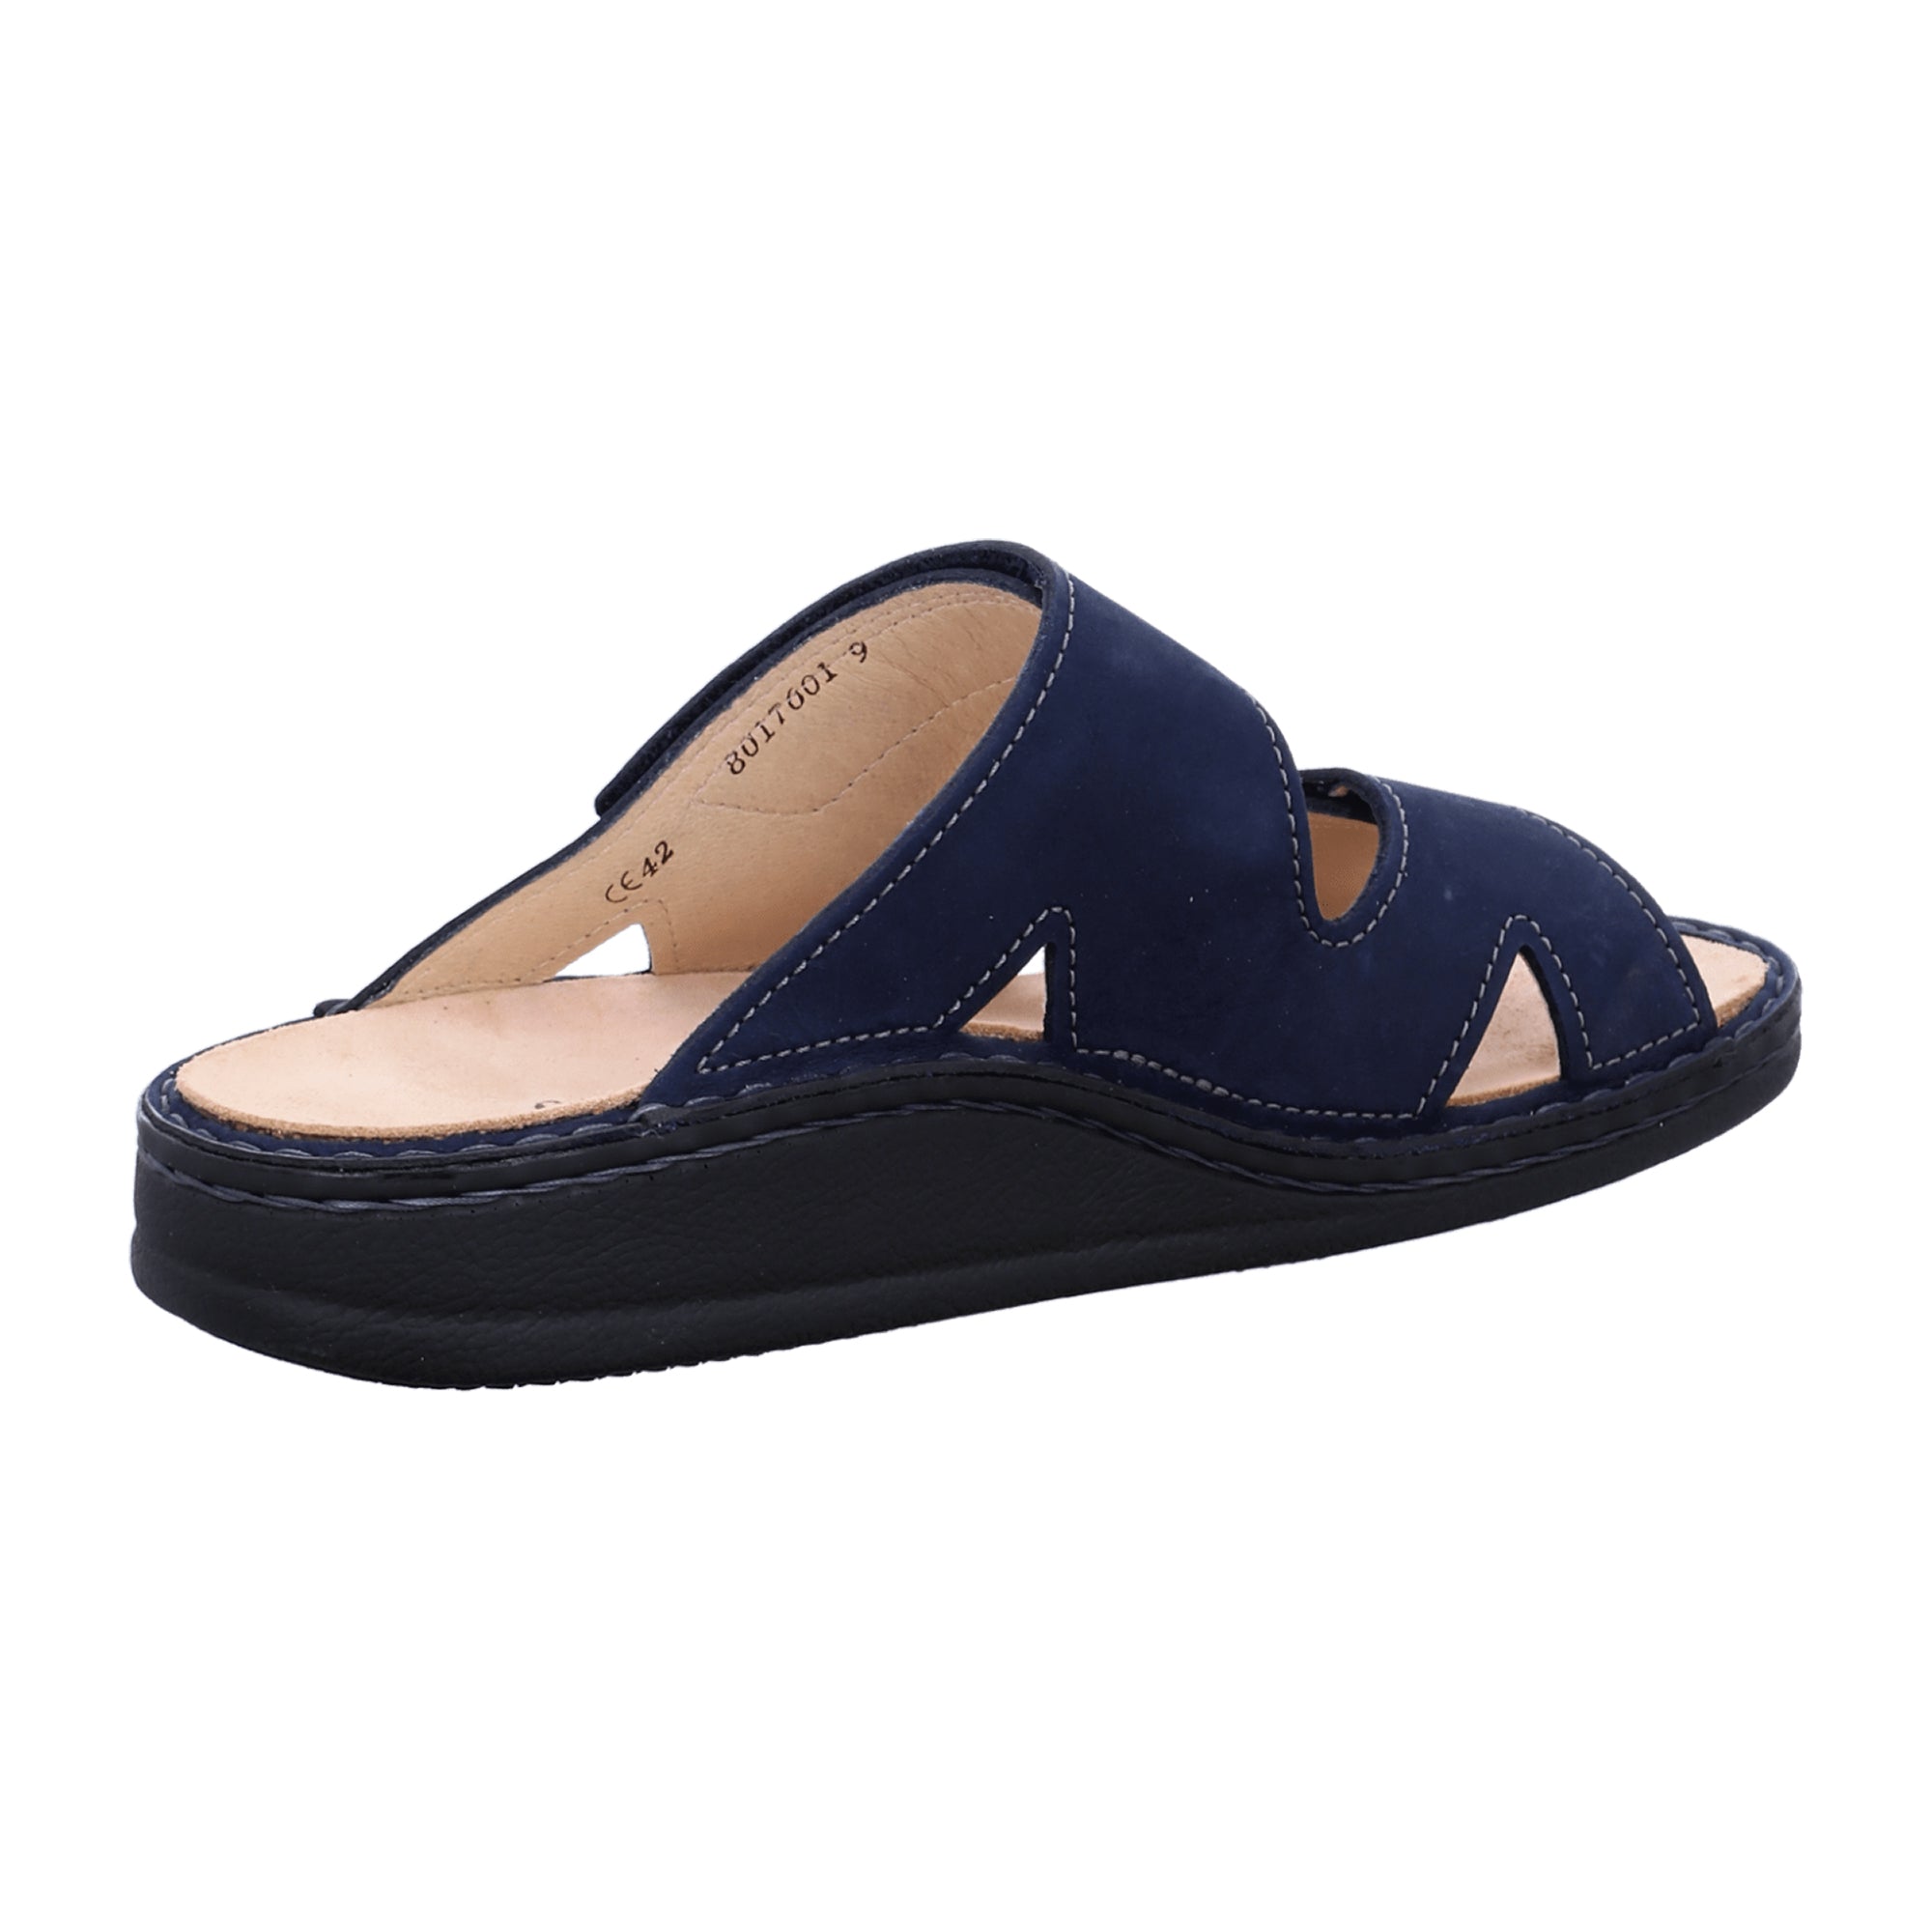 Finn Comfort Danzig-S Men's Comfort Sandals, Blue - Stylish & Durable